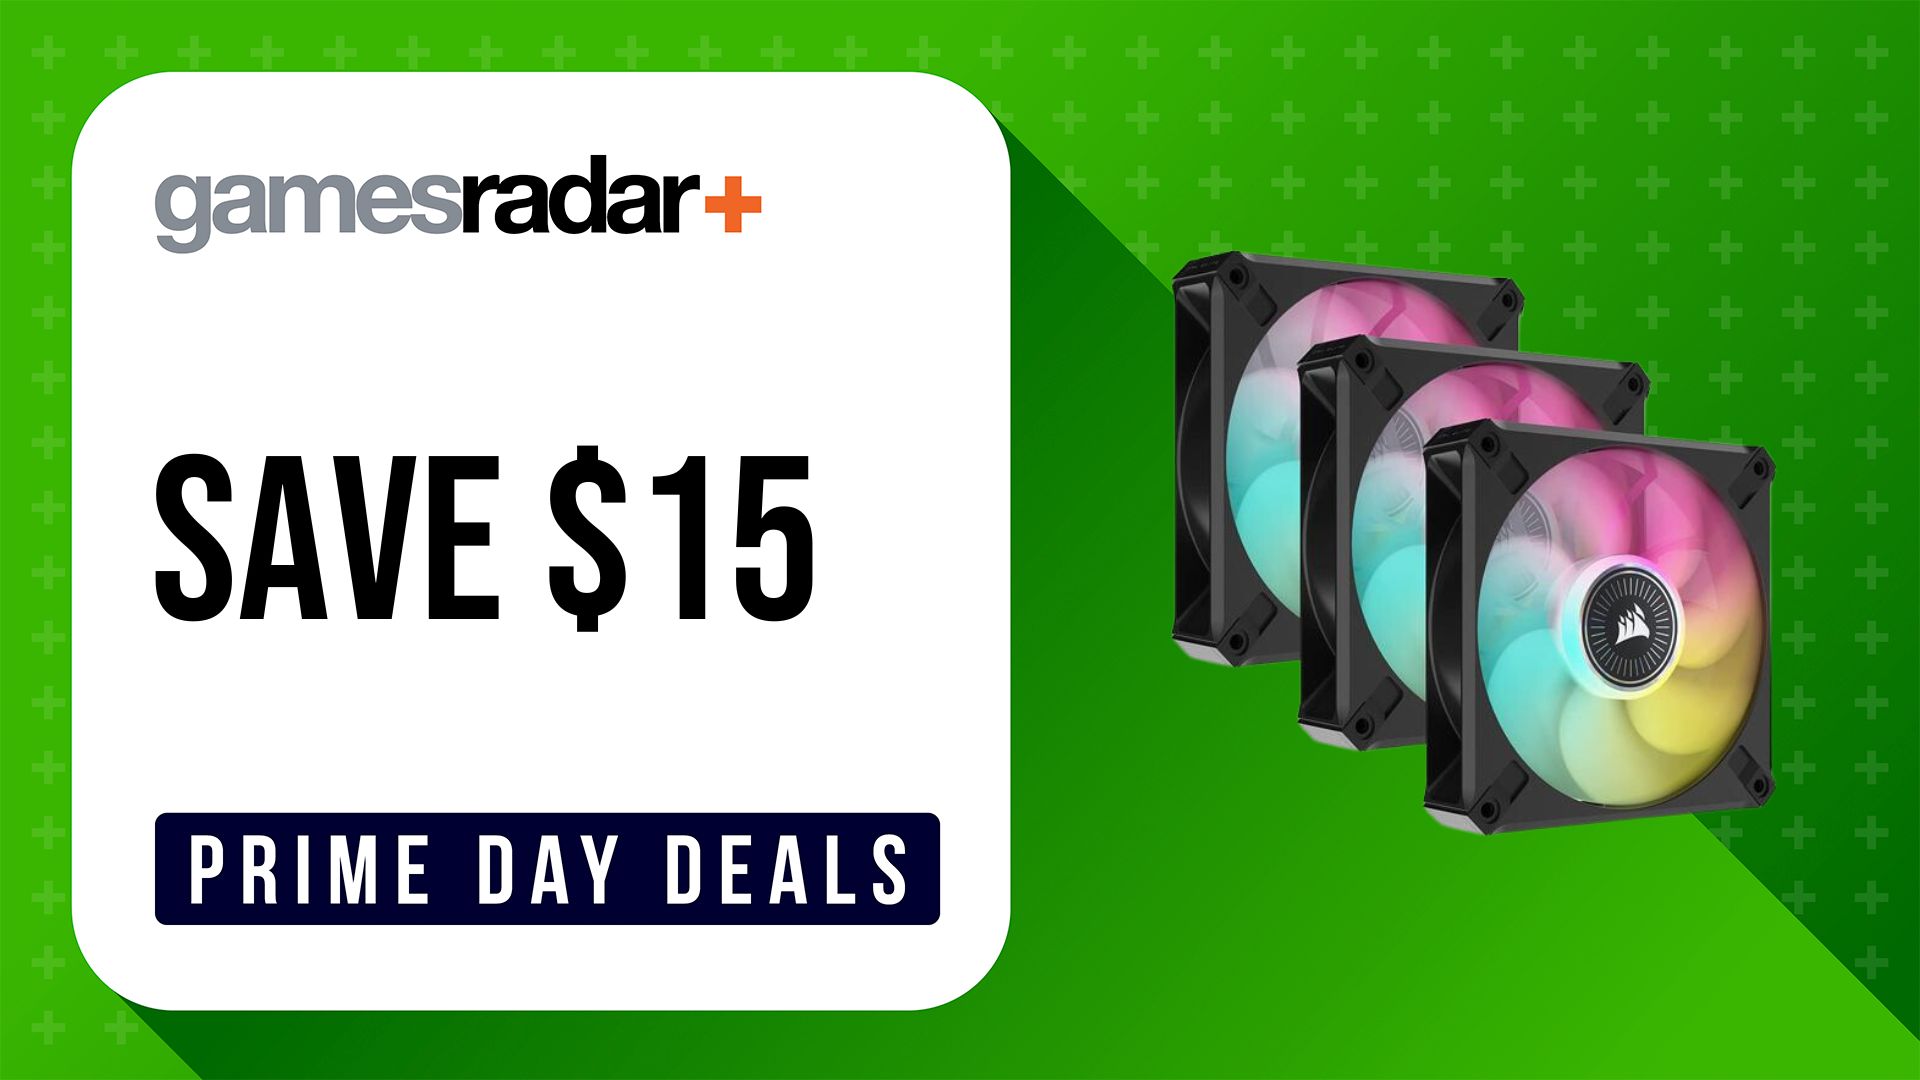 Corsair iCUE ML120 RGB Elite Fans for Prime Day gaming PC deals via Newegg